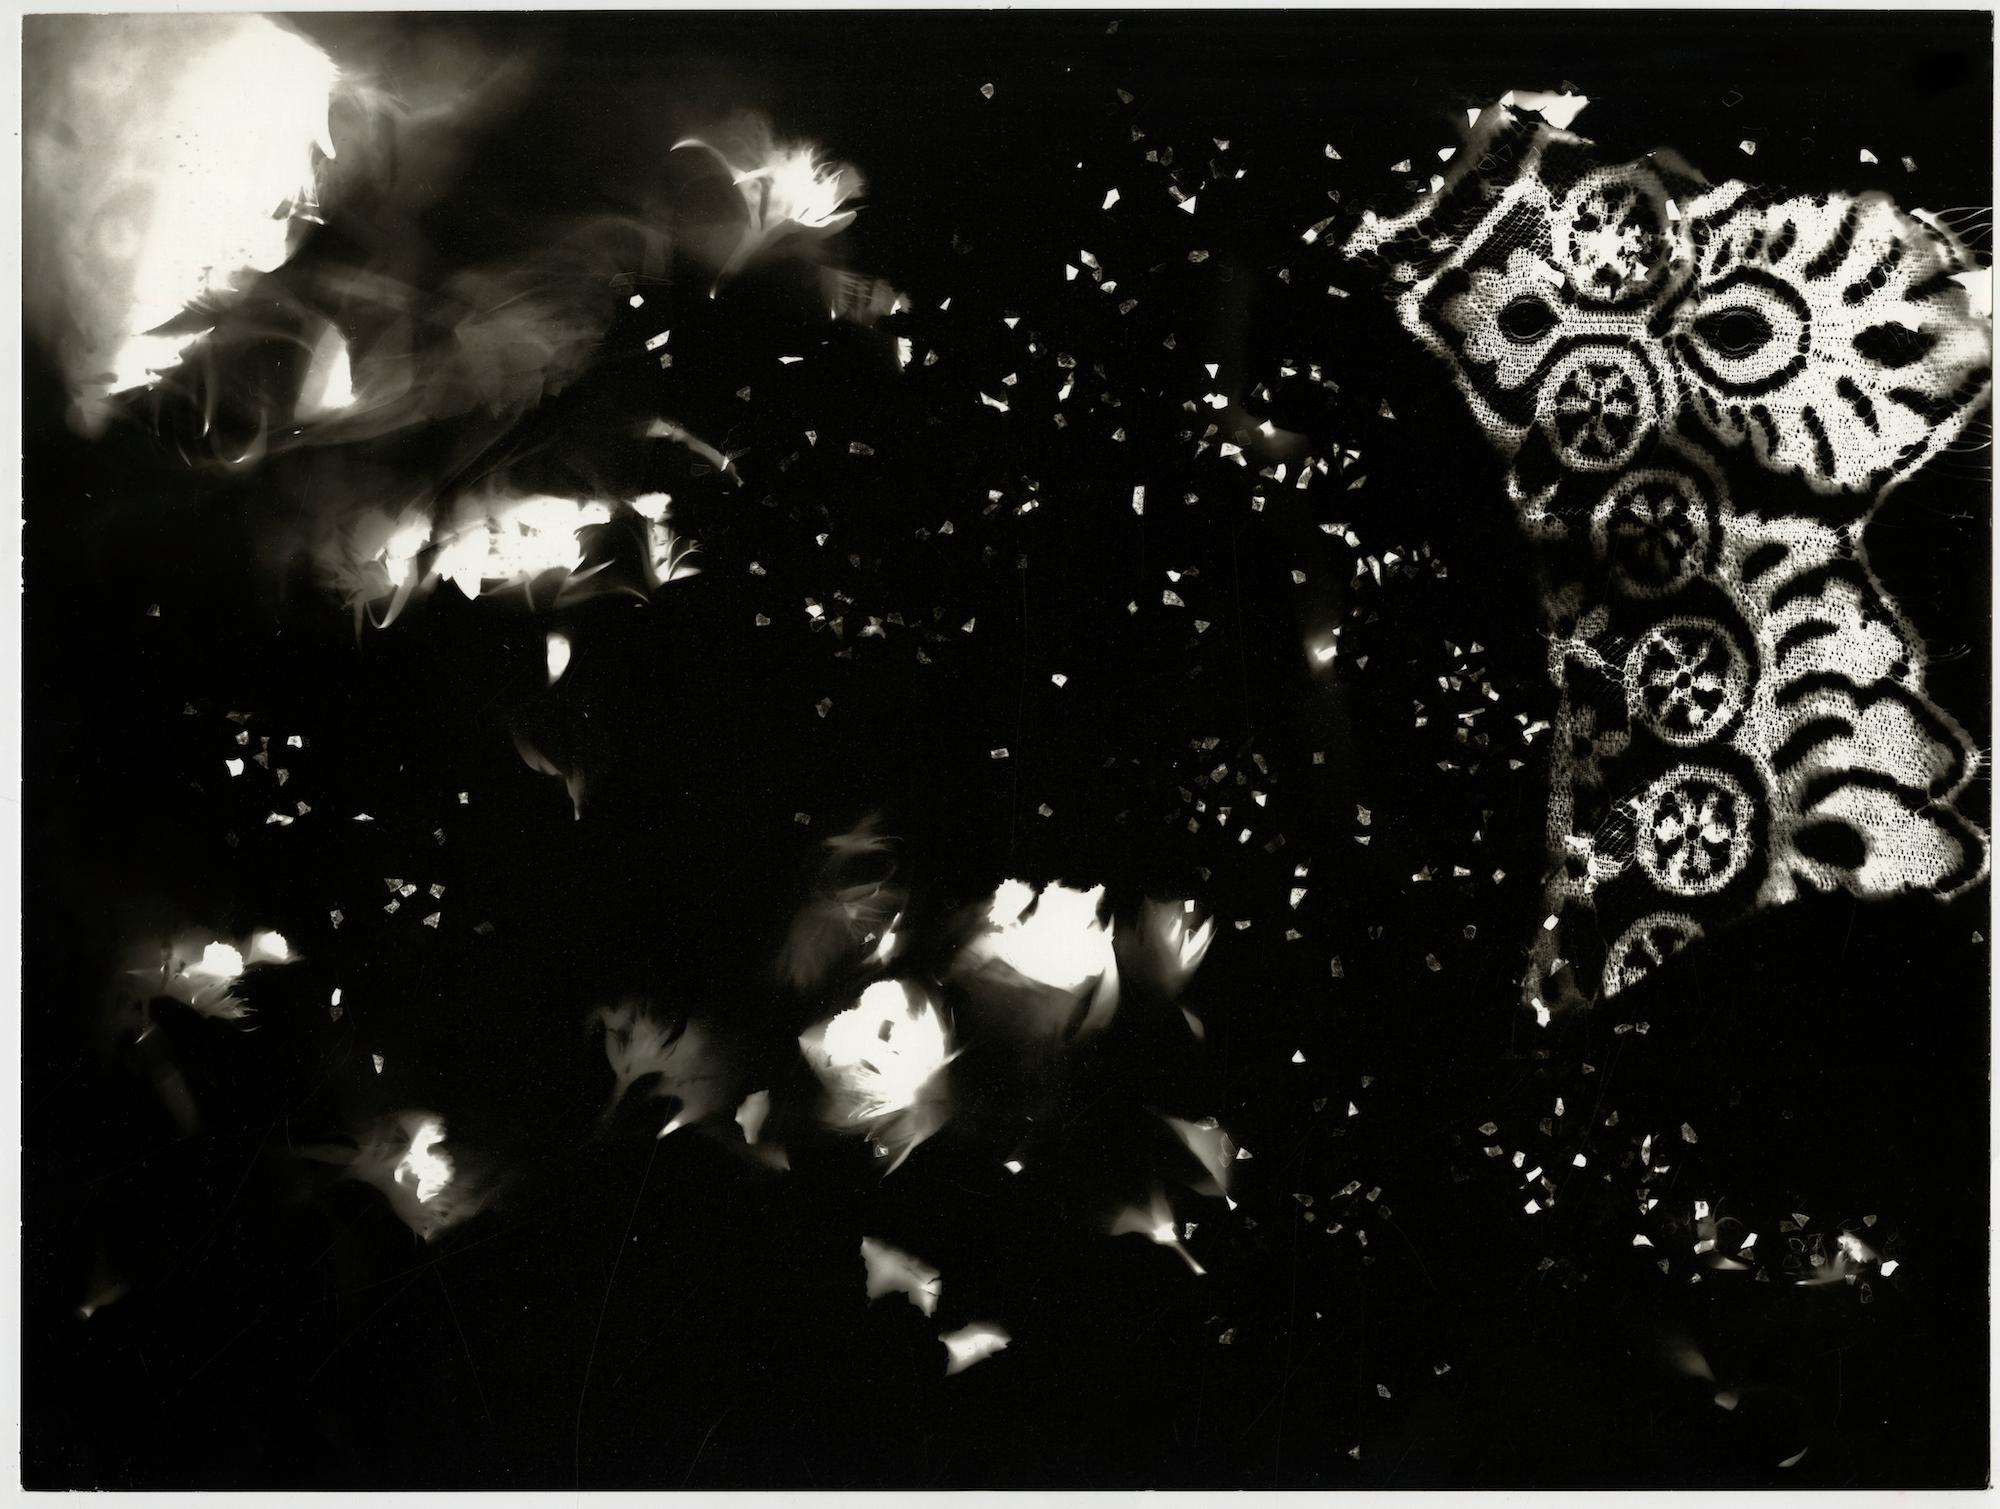 Inception - unique black and white contemporary abstract figurative photograph